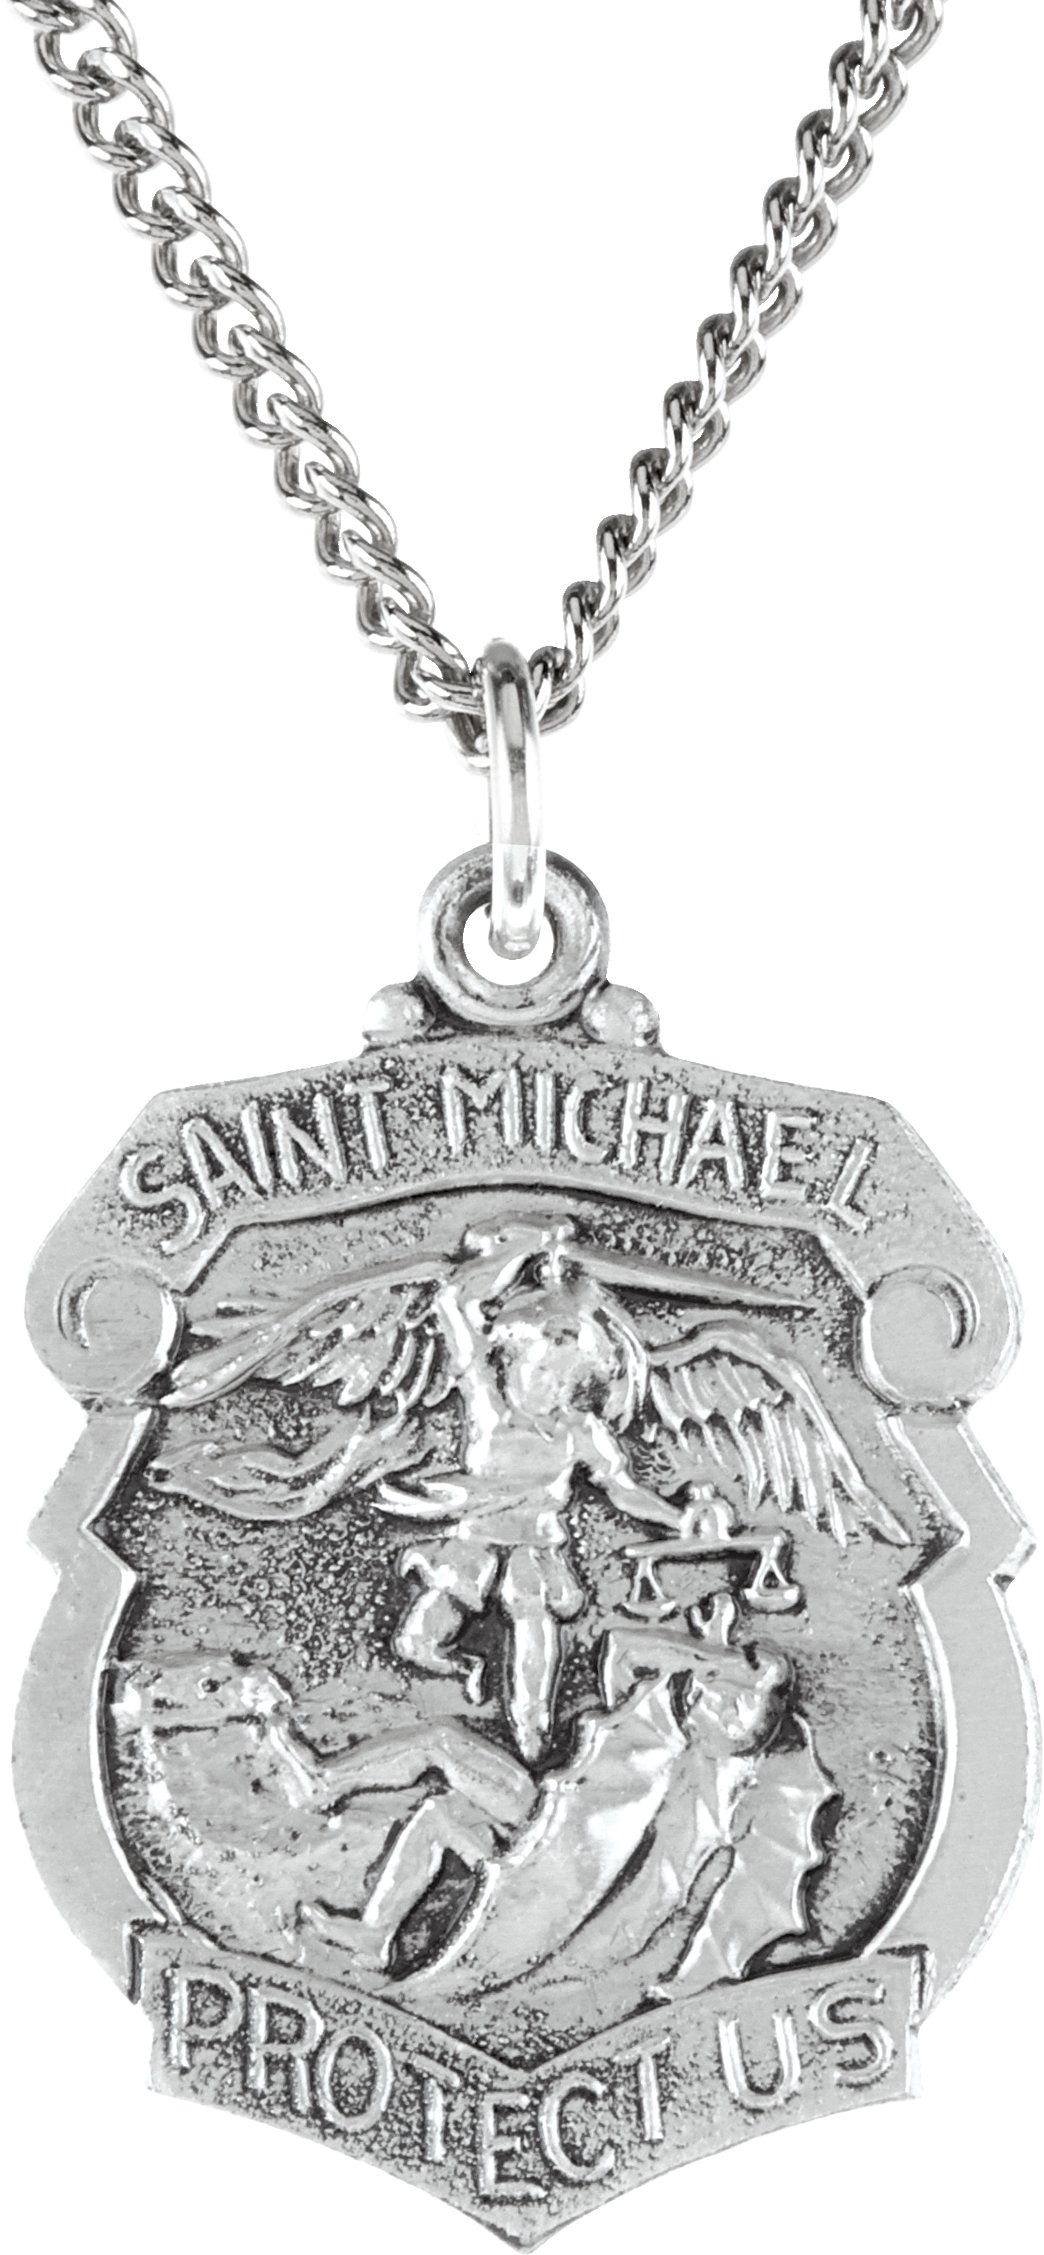 St. Michael Medal Badge Design Ref 618474